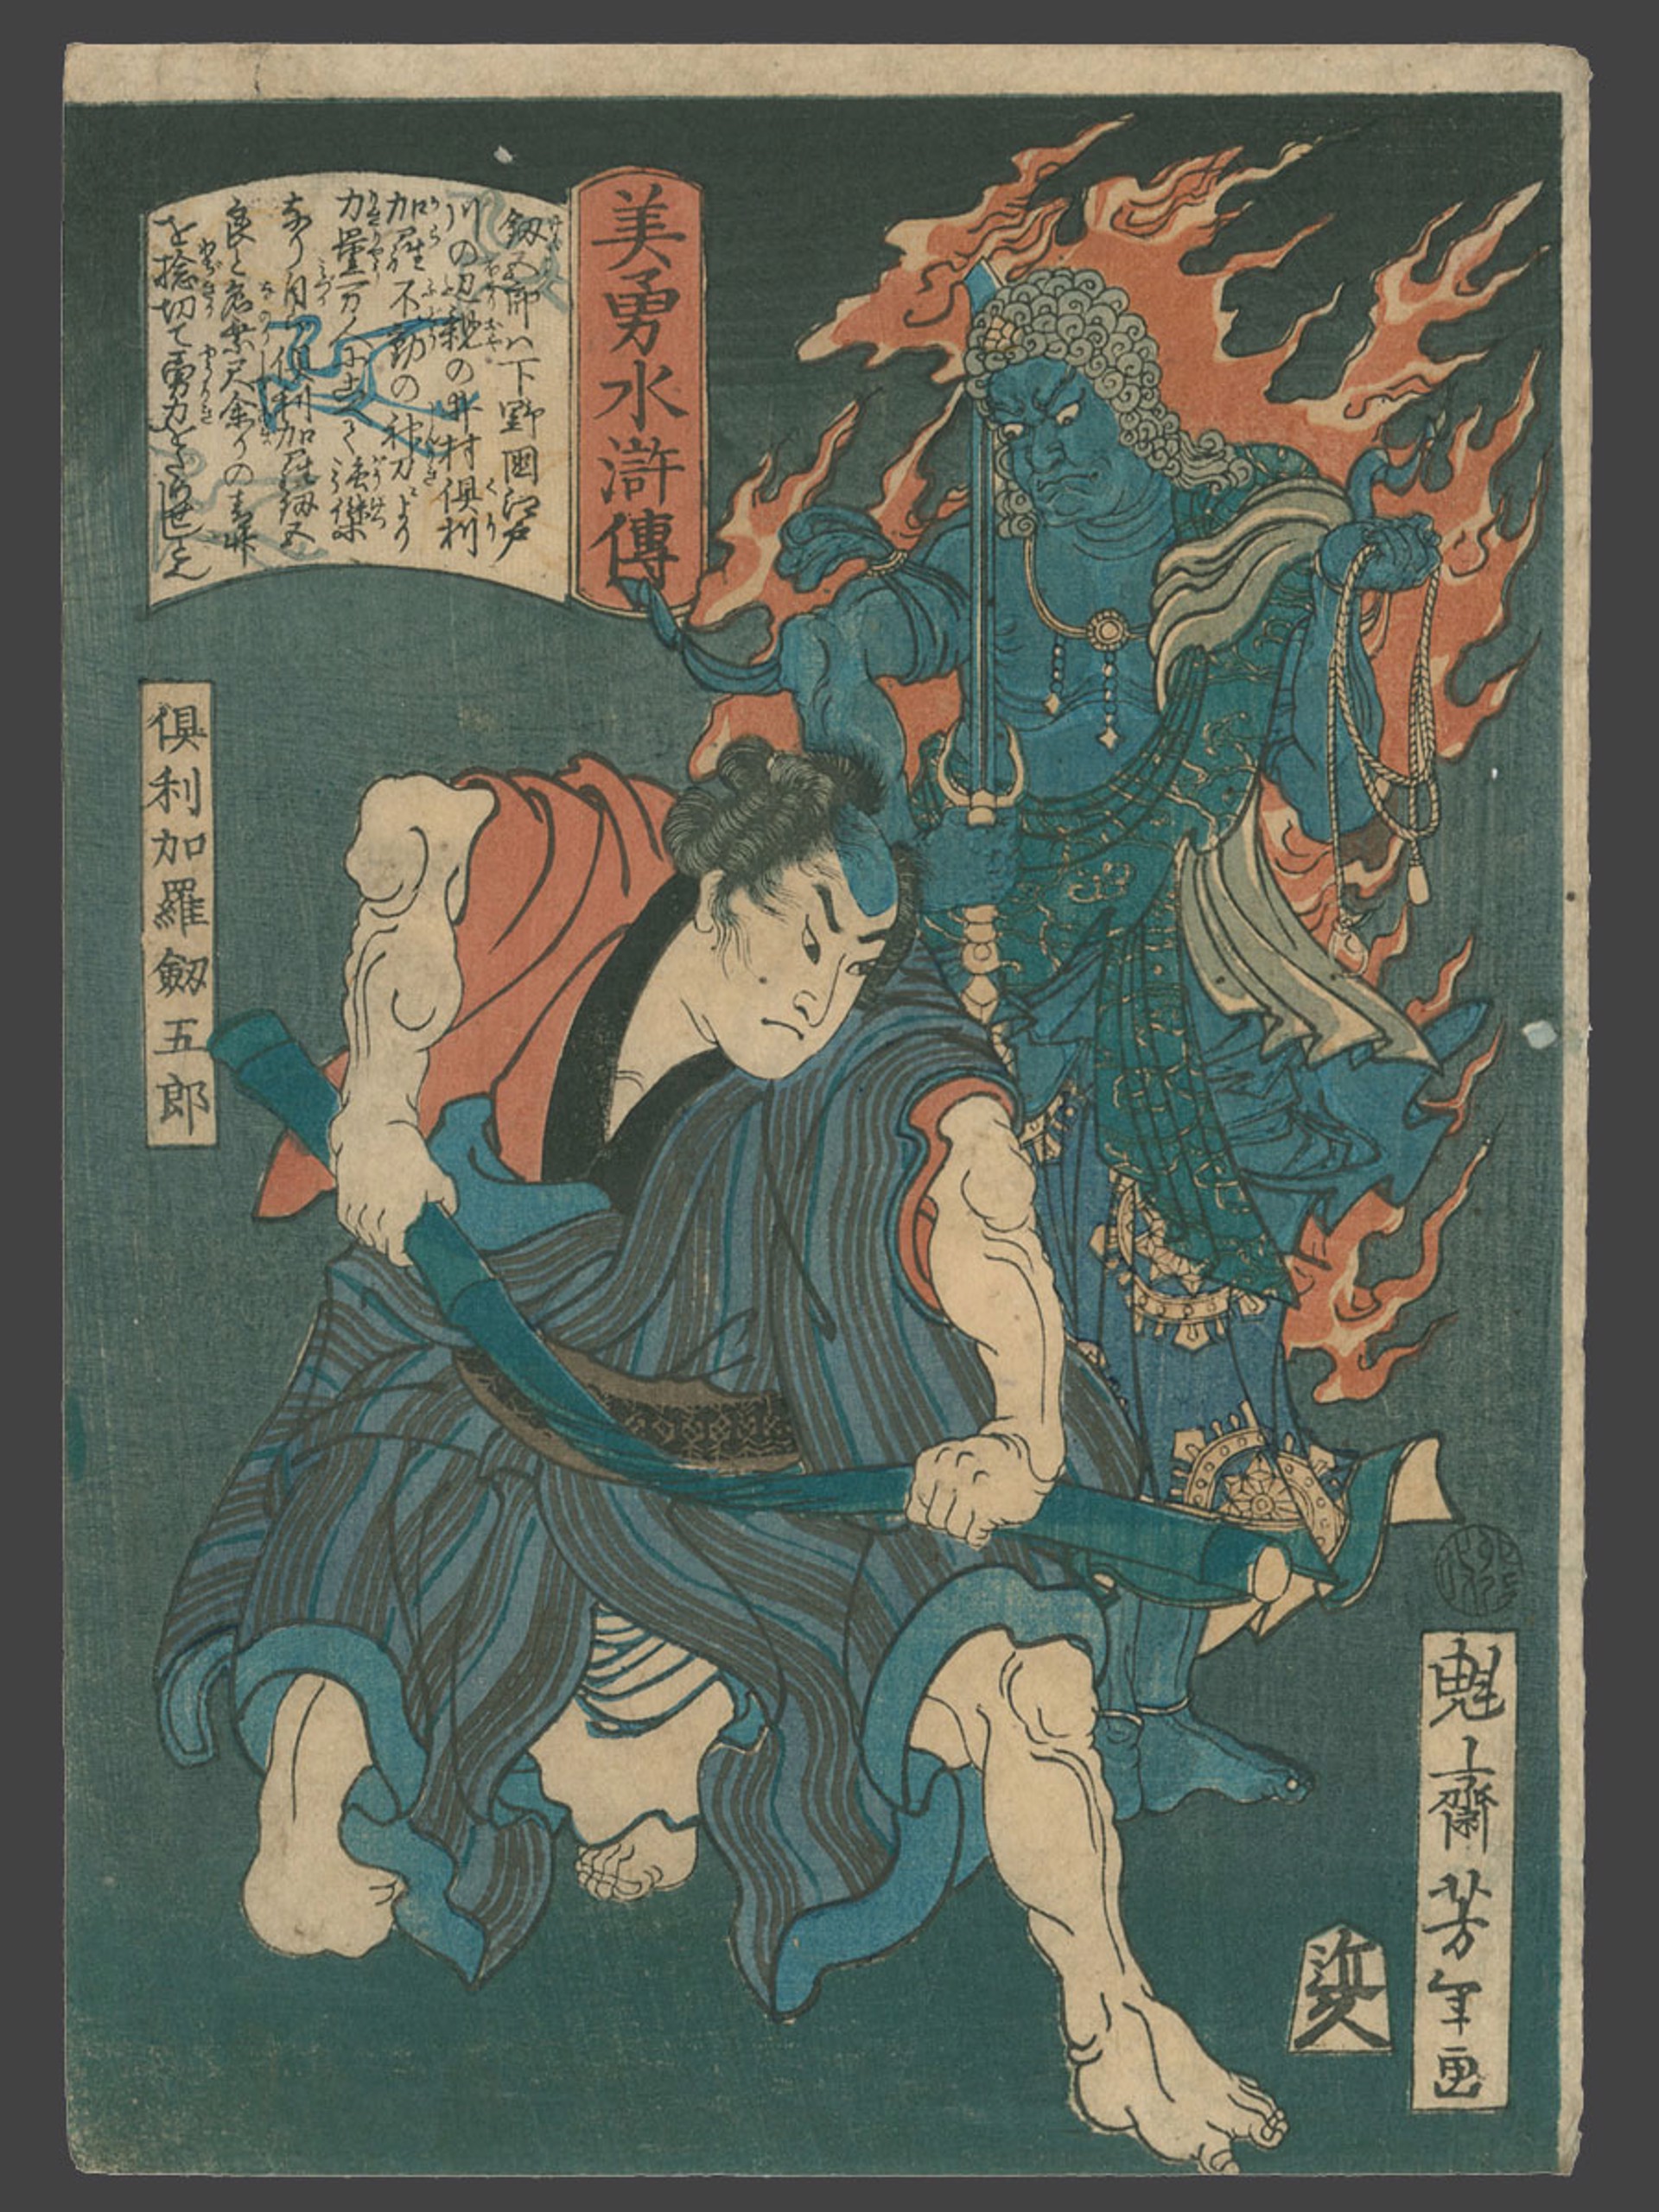 Kurikawa Kengoro Biyu Suikoden (Beauty and Valor in Tales of the Water Margin) by Yoshitoshi